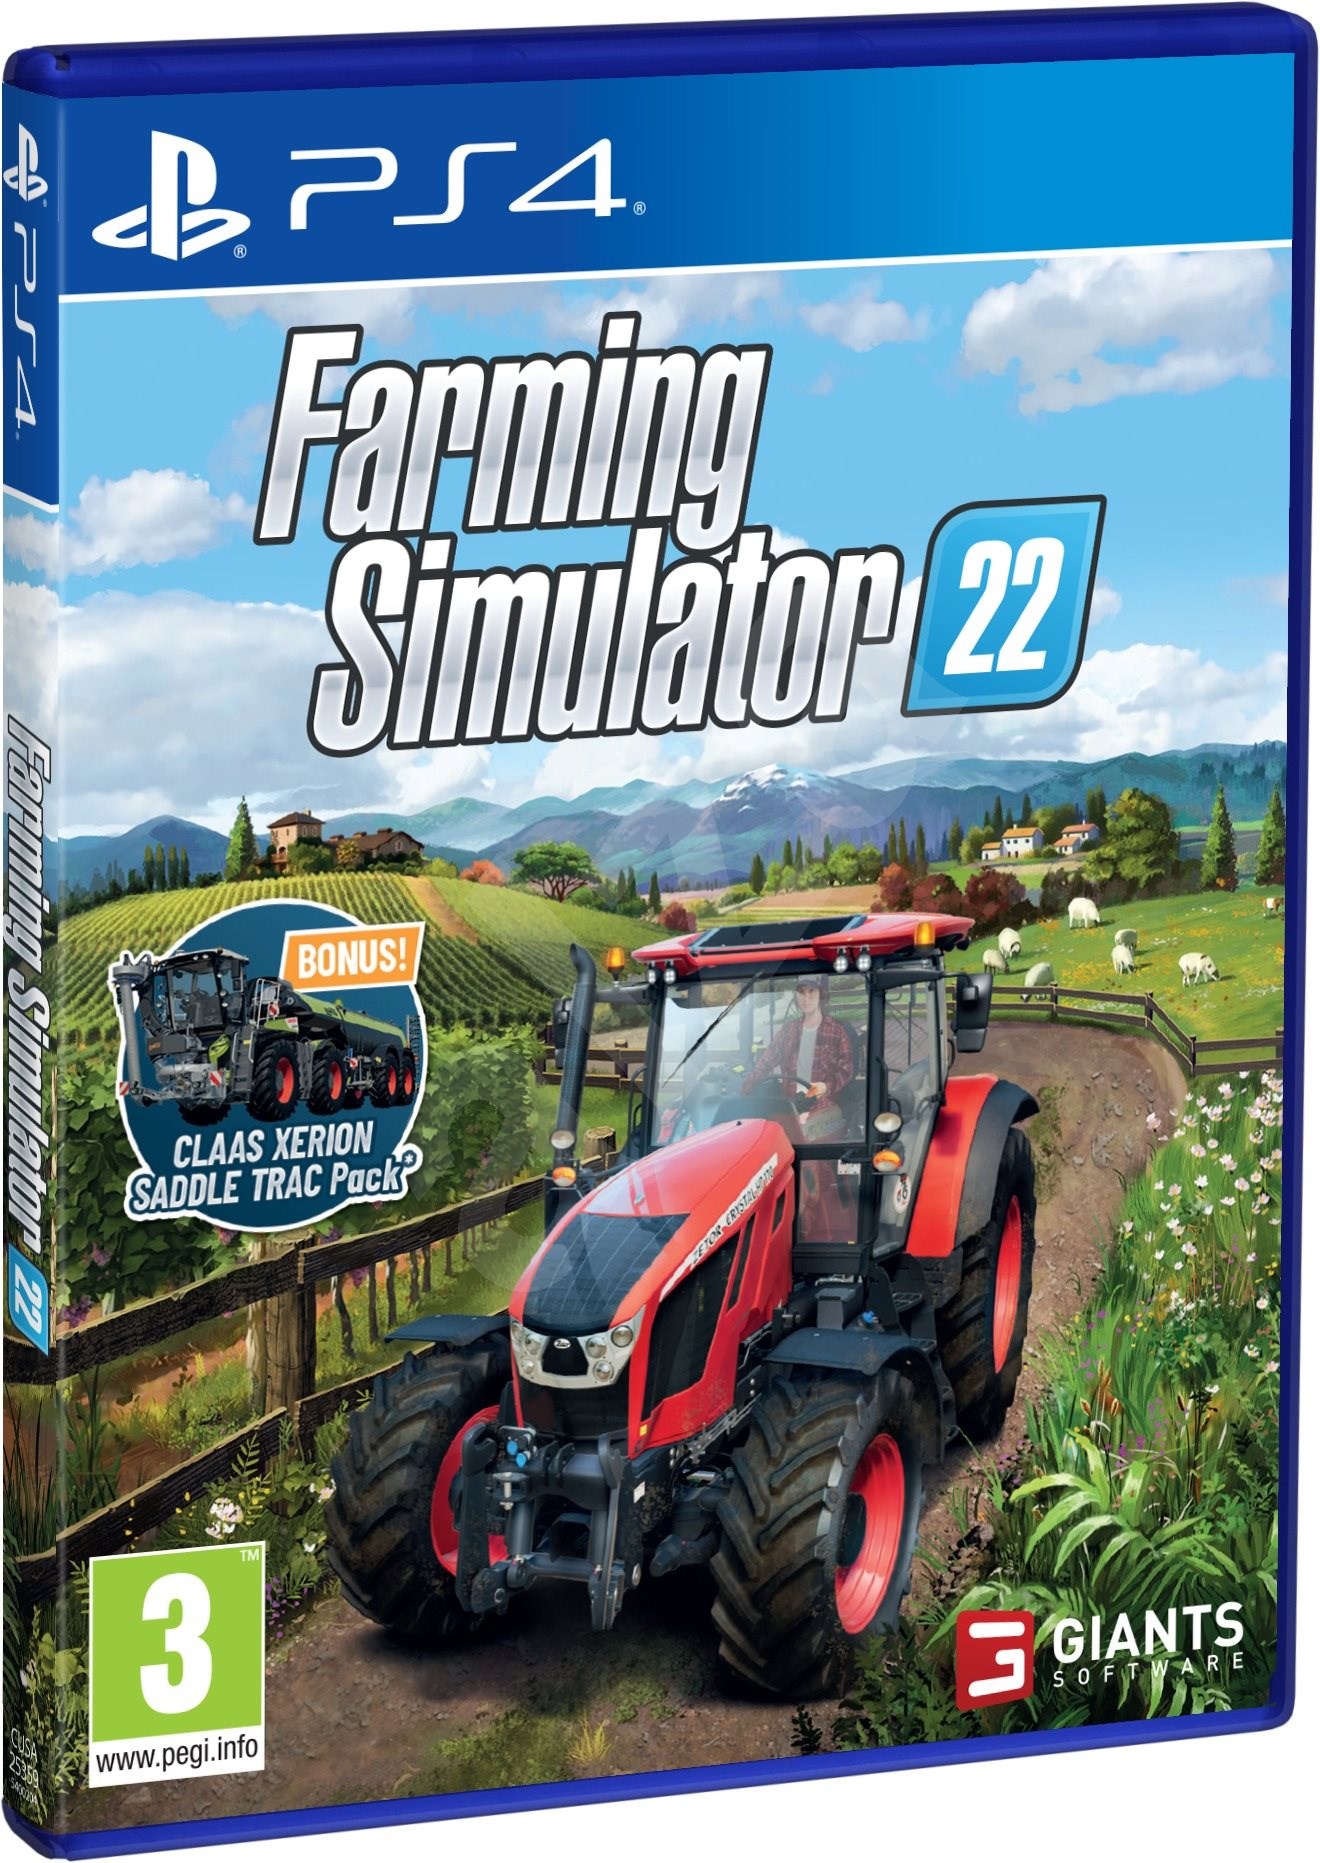 download free farming simulator 22 ps4